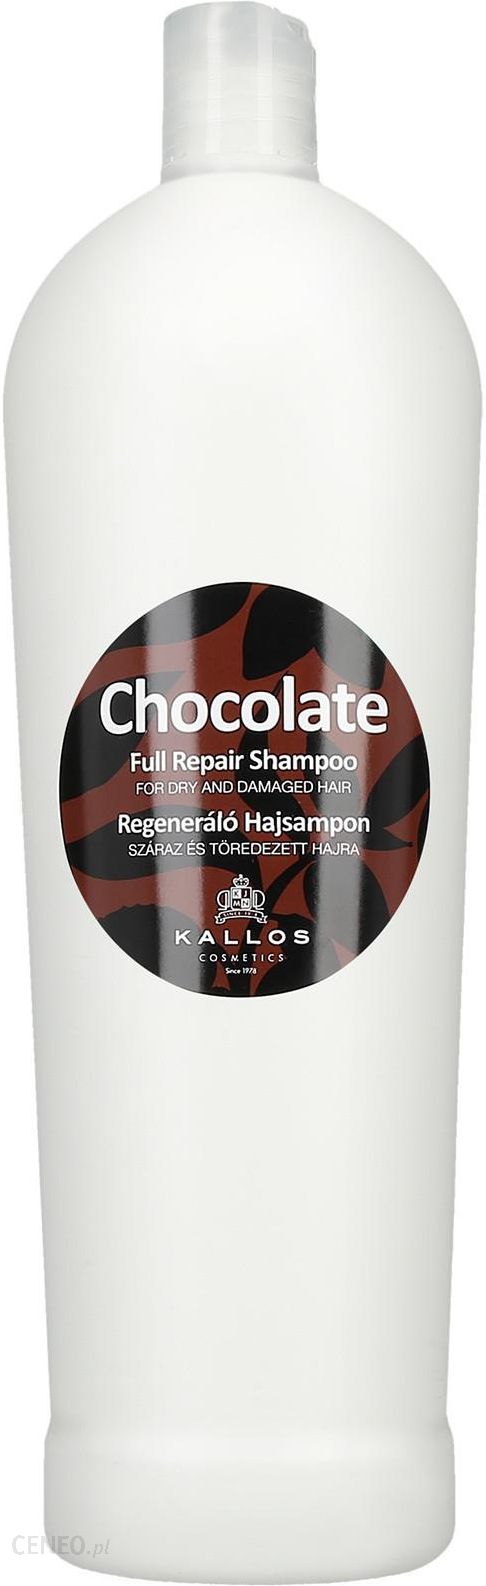 kallos czekoladowy szampon